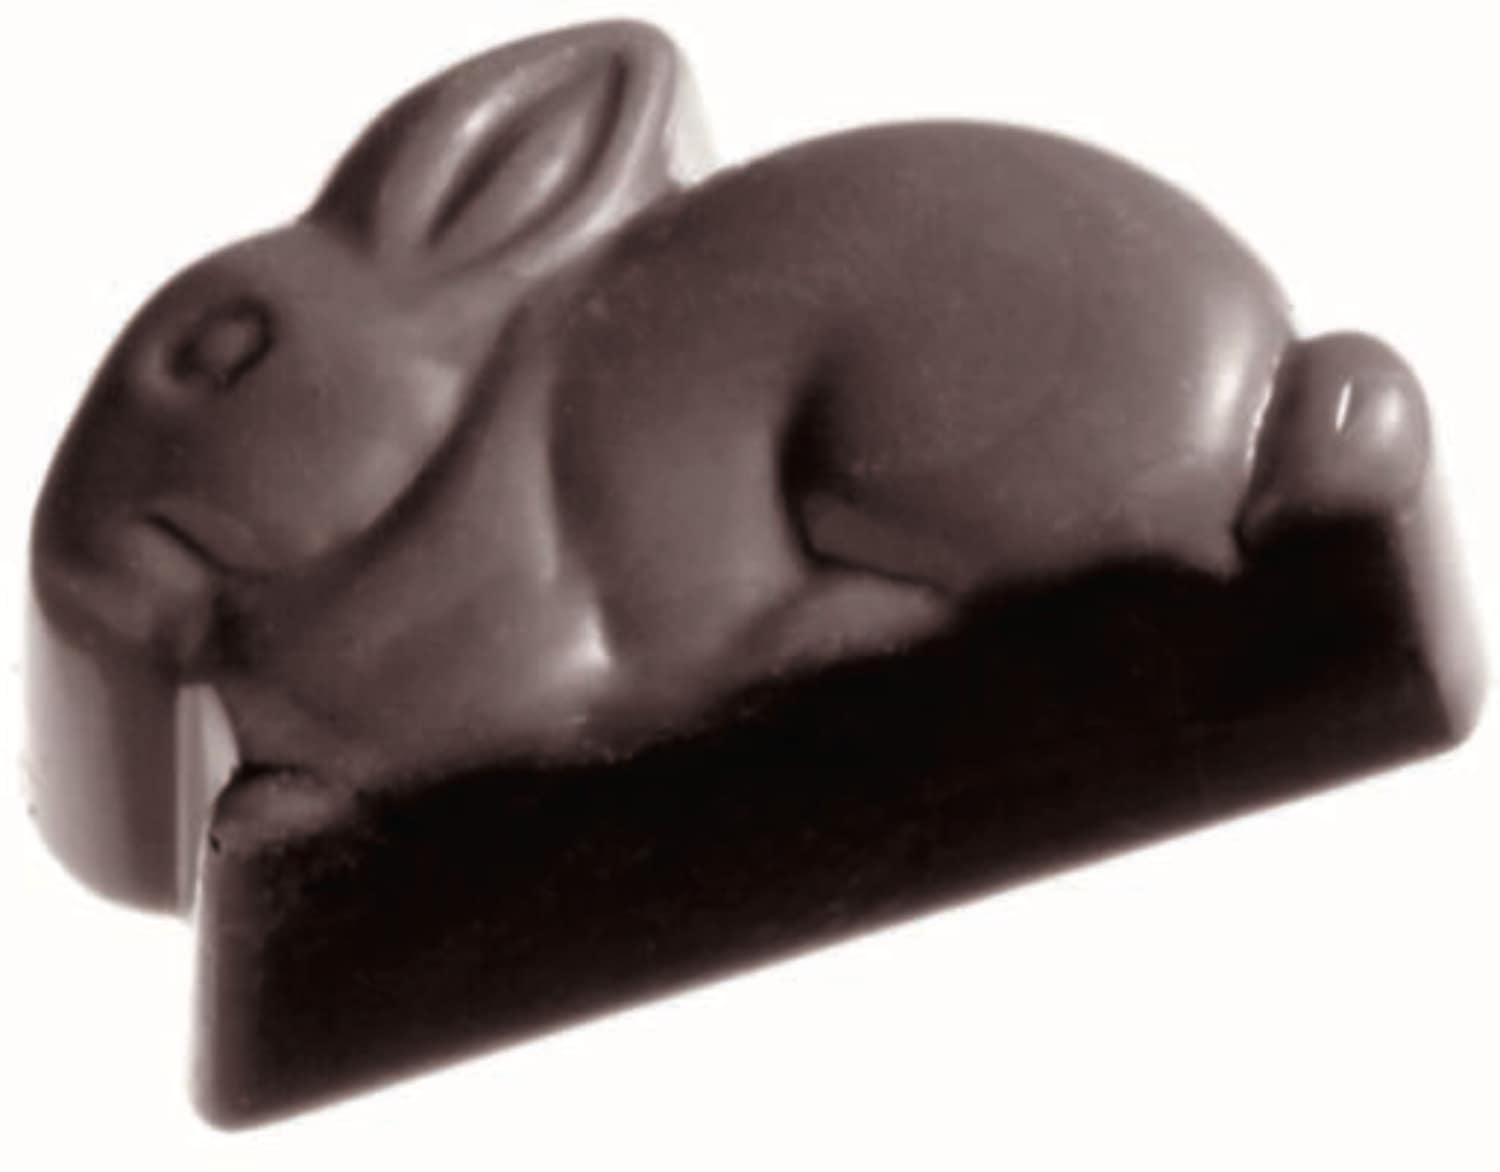 Chocolate mould "rabbit" 421362 421362